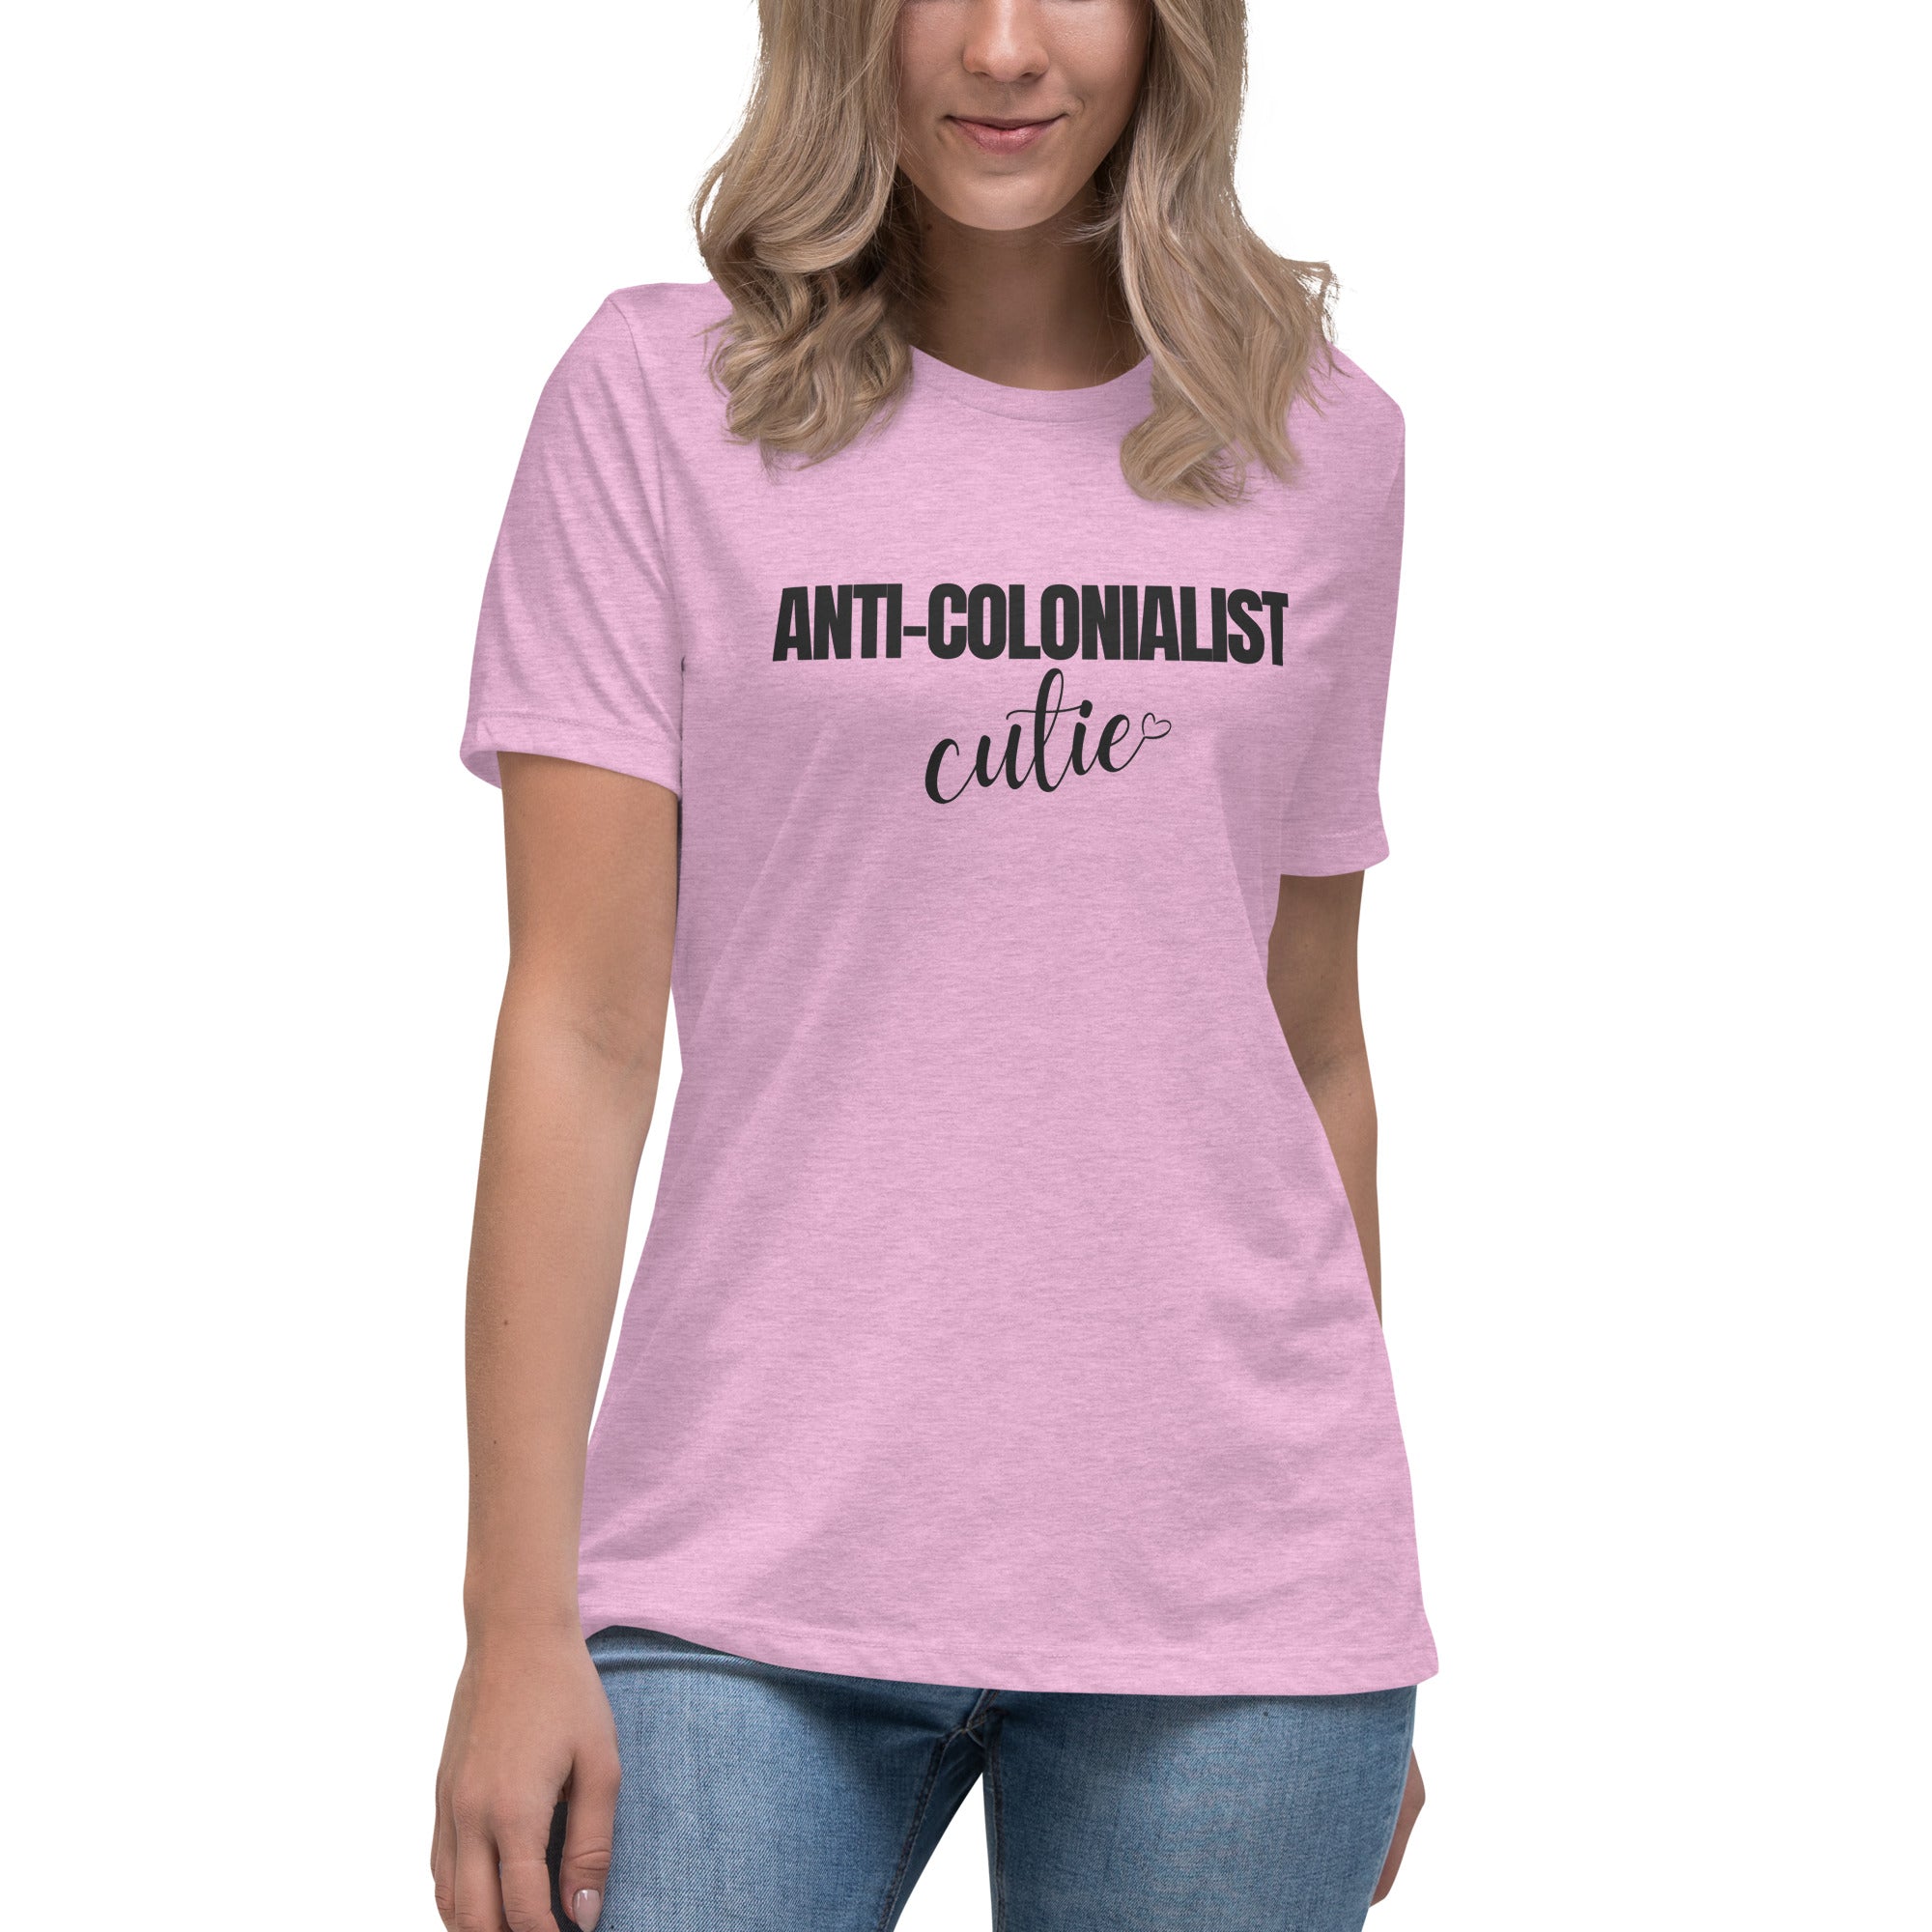 Anti-Colonialist Cutie - Women's Relaxed T-Shirt